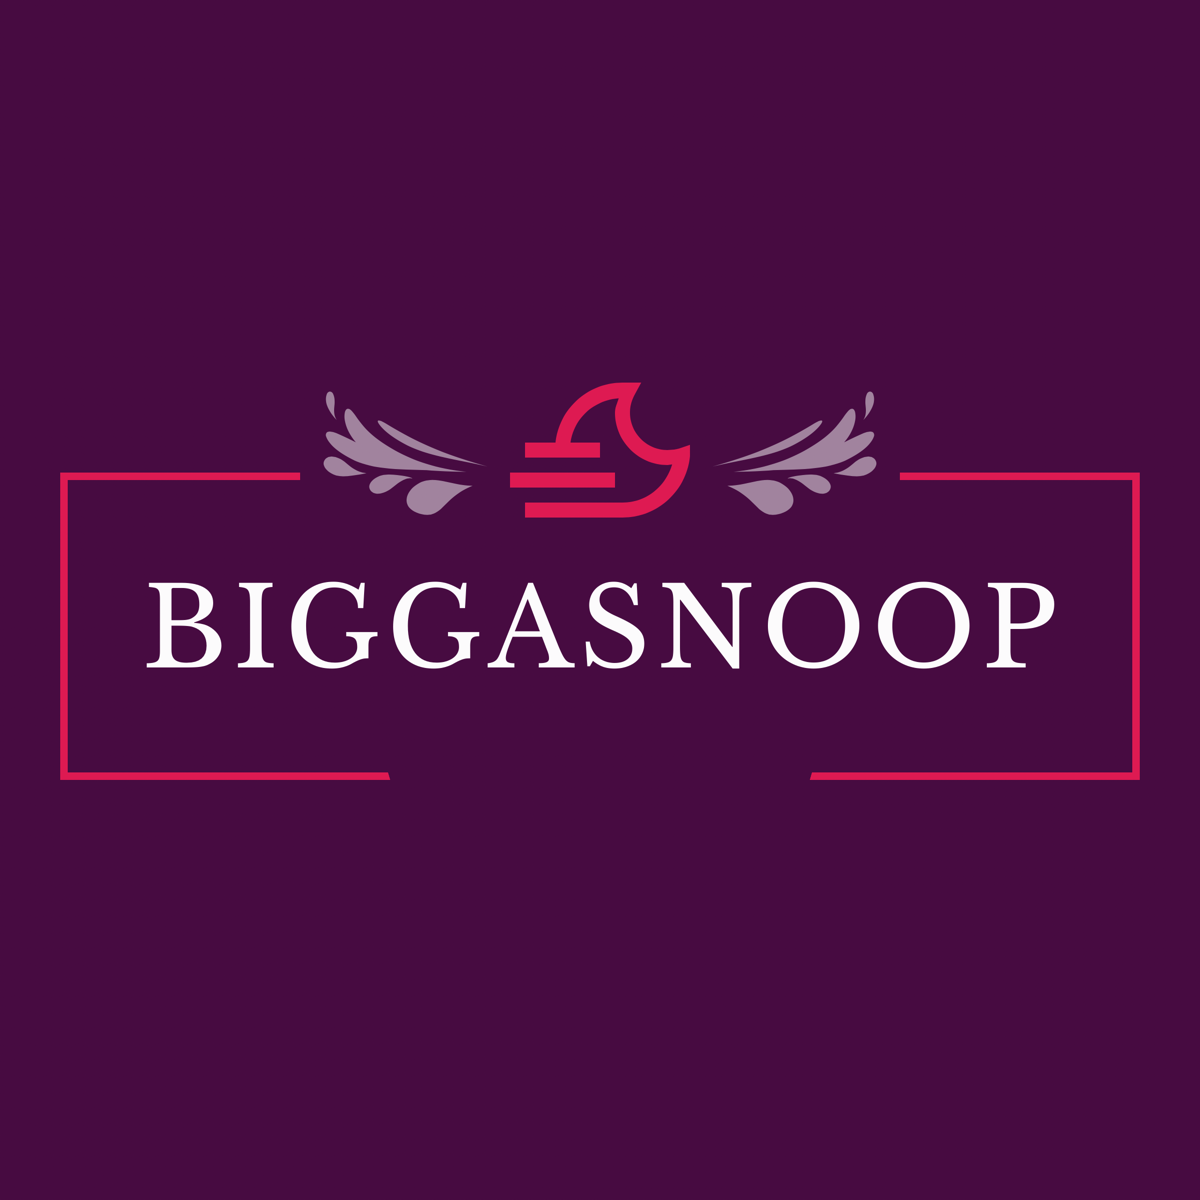 Biggasnoop